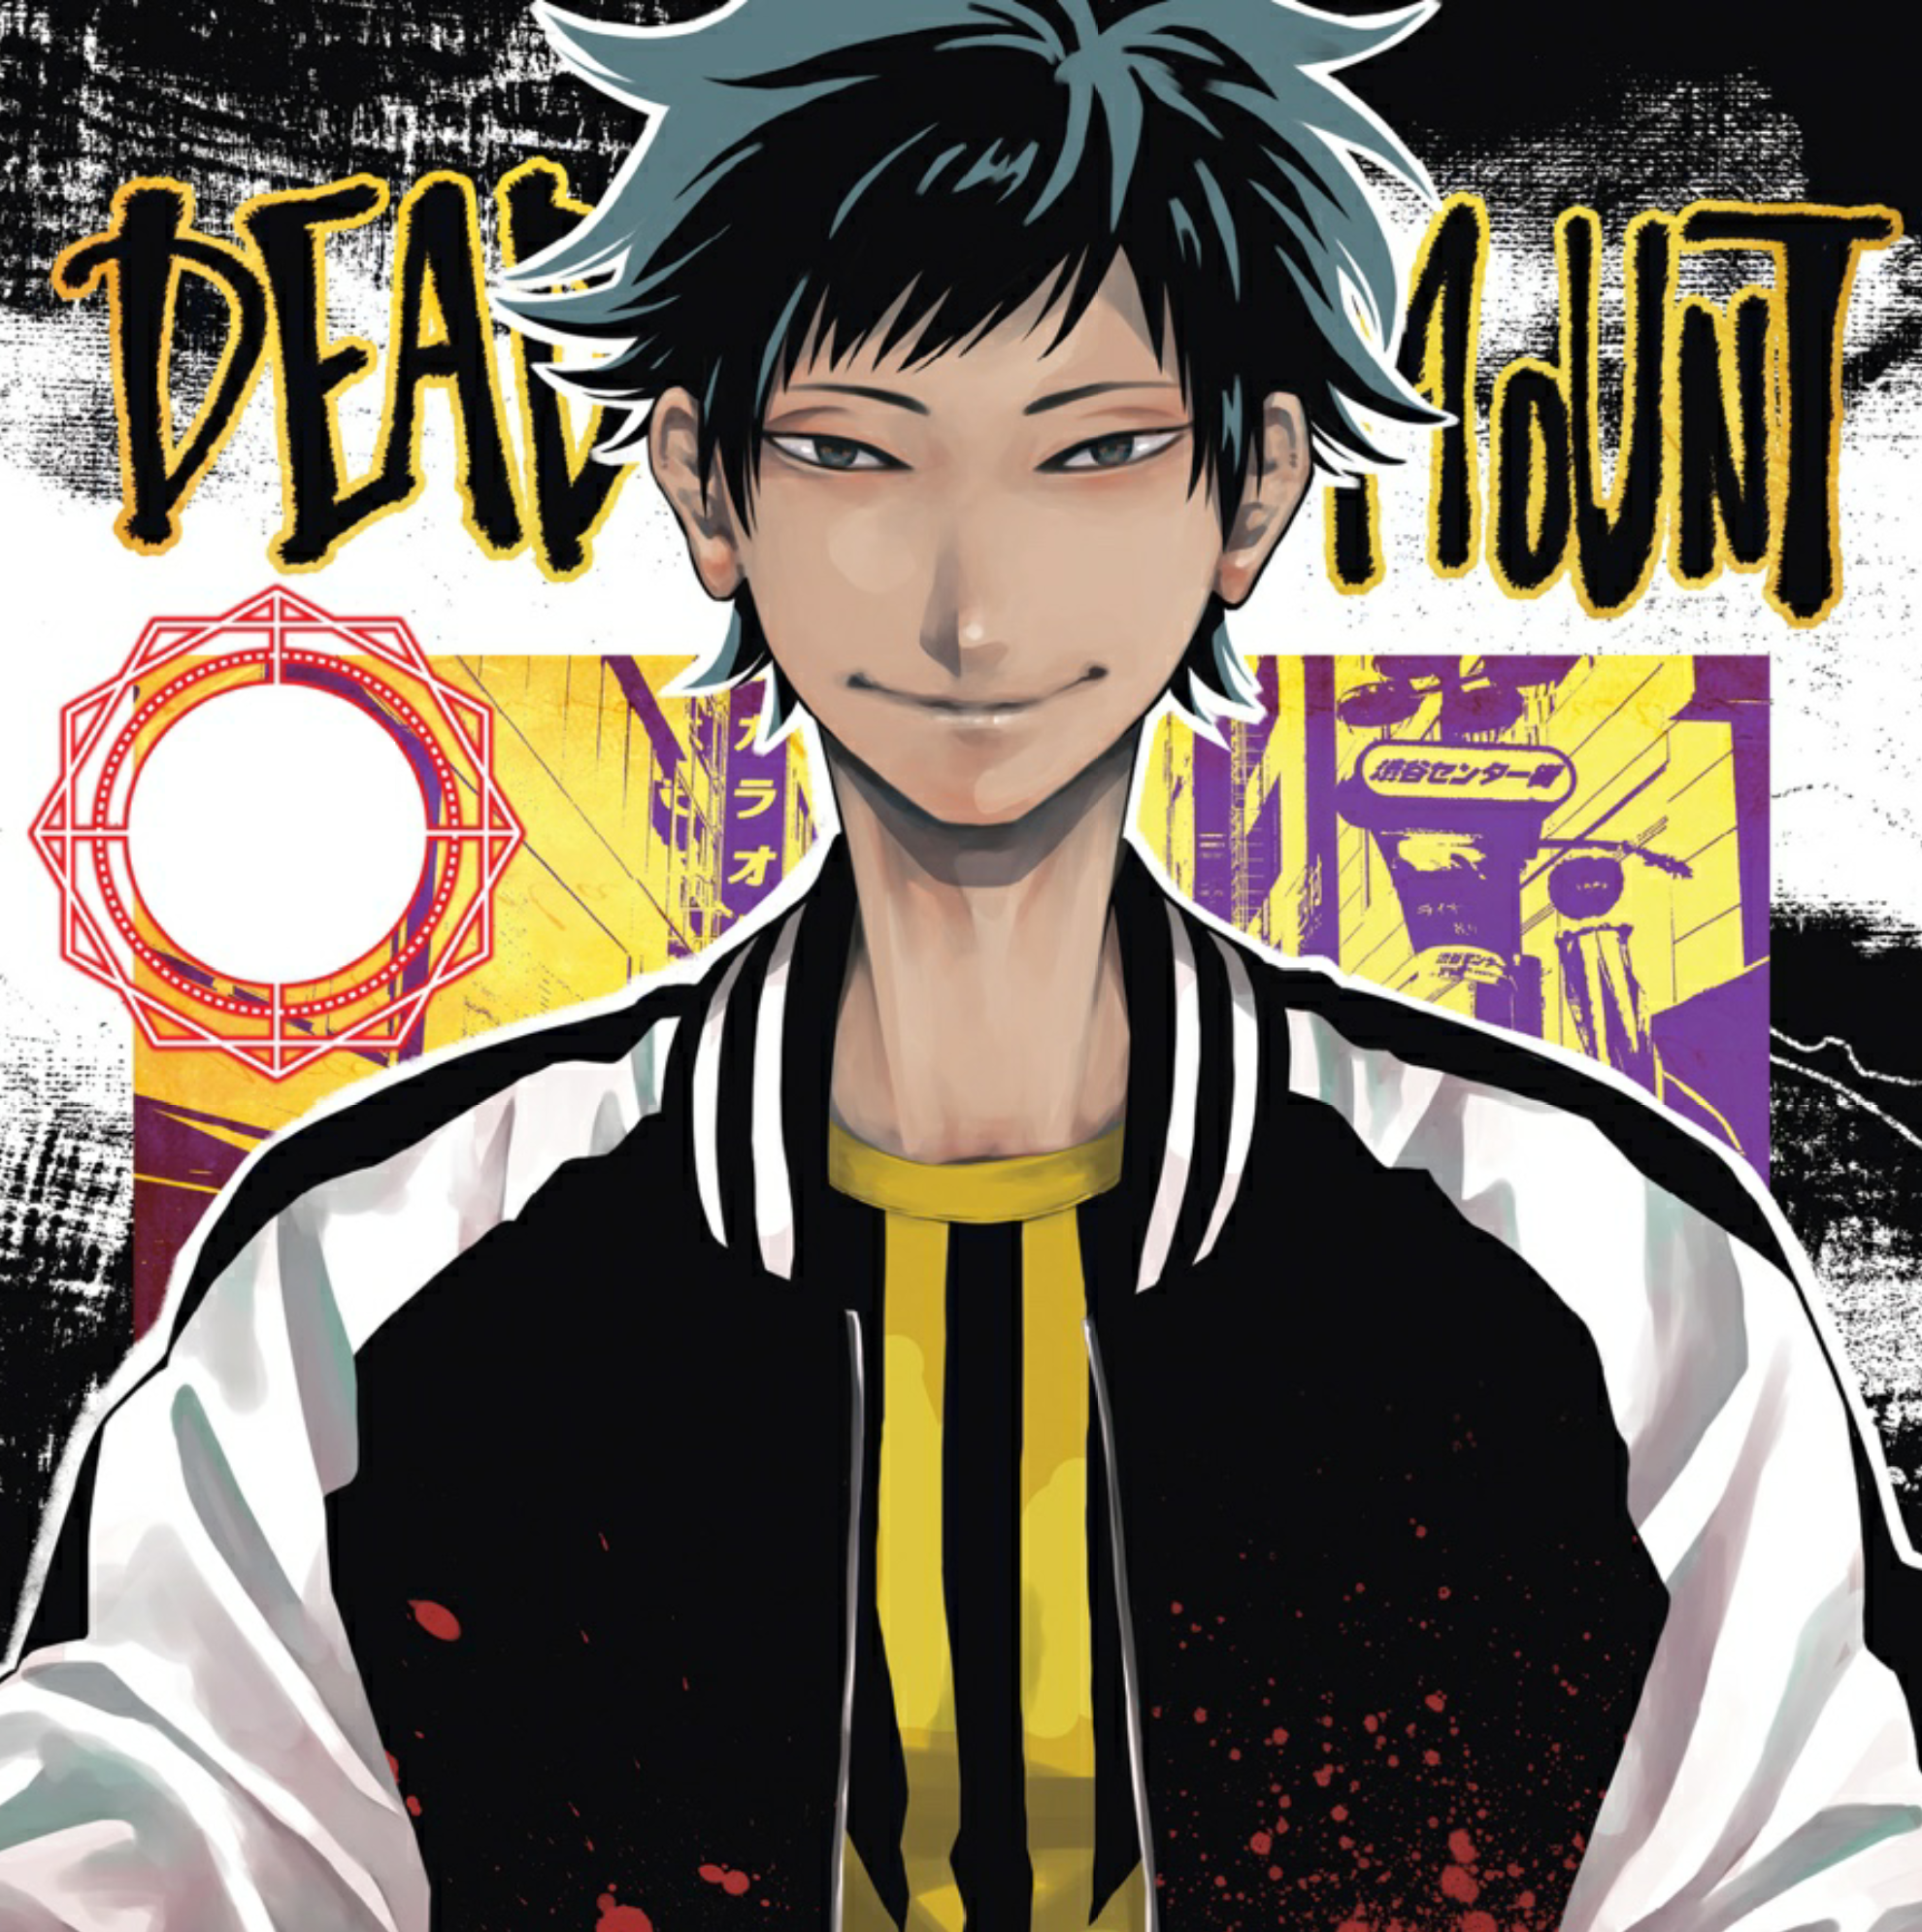 Volume 7, Dead Mount Death Play Wiki